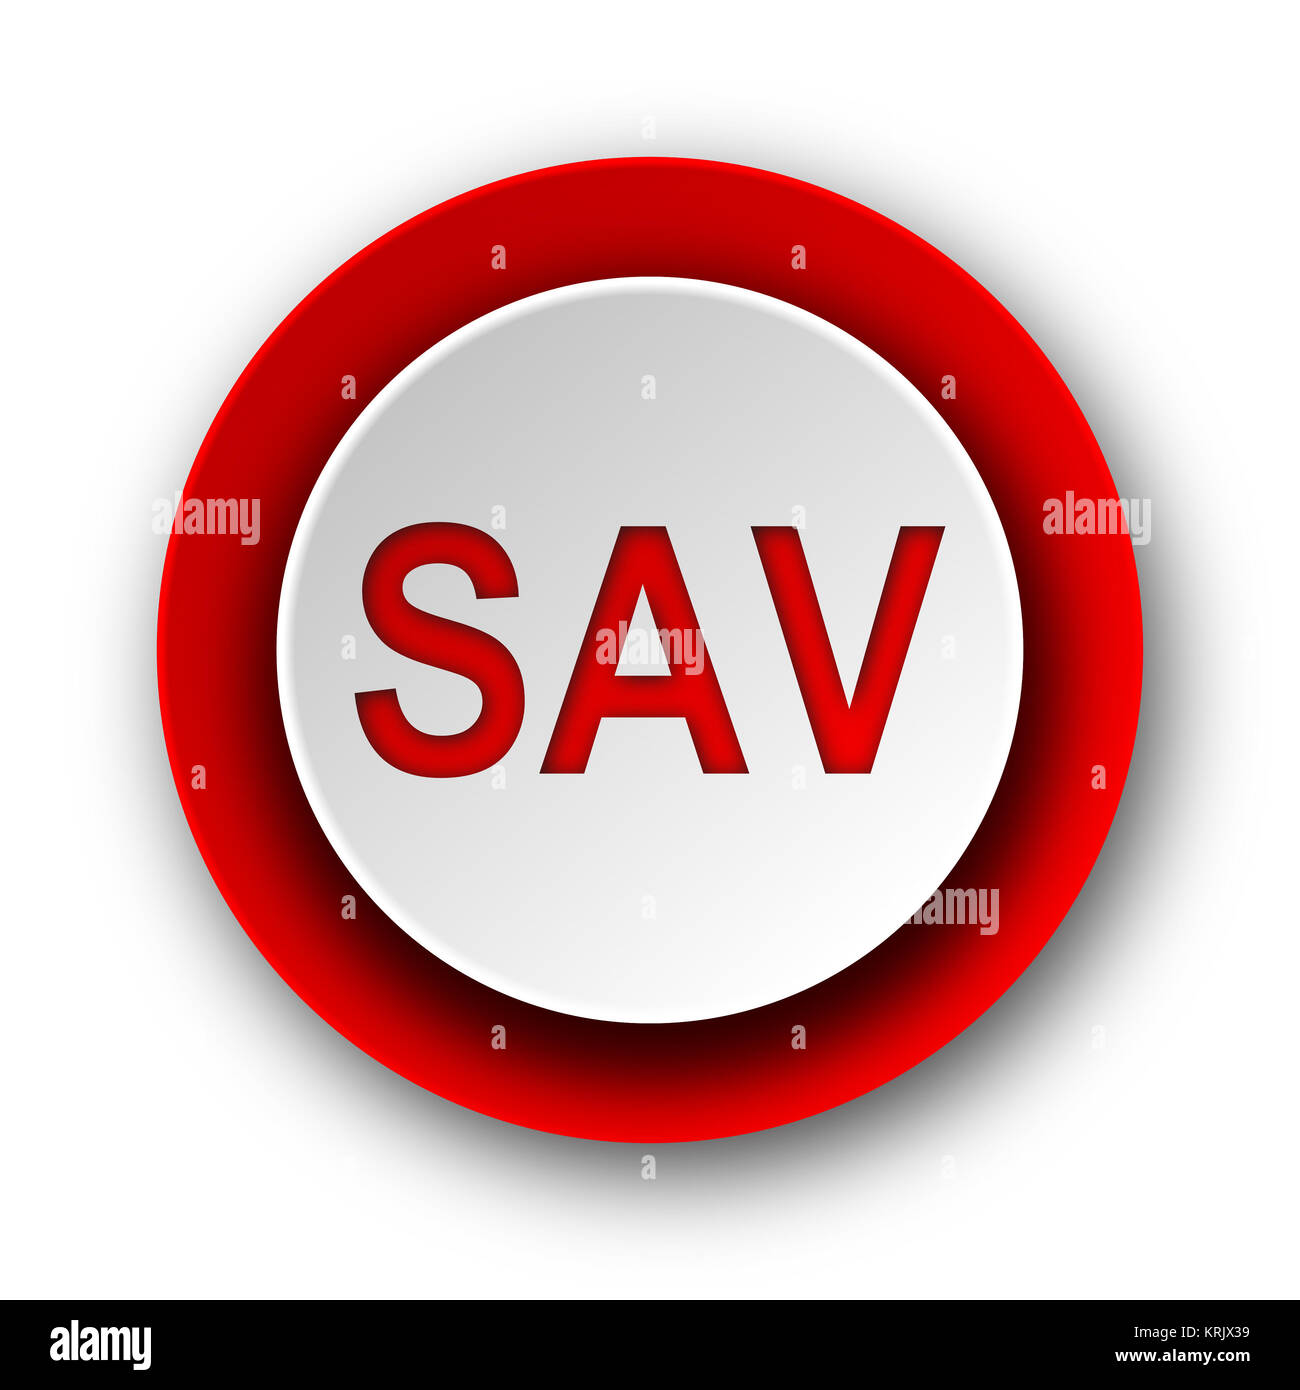 sav red modern web icon on white background Stock Photo